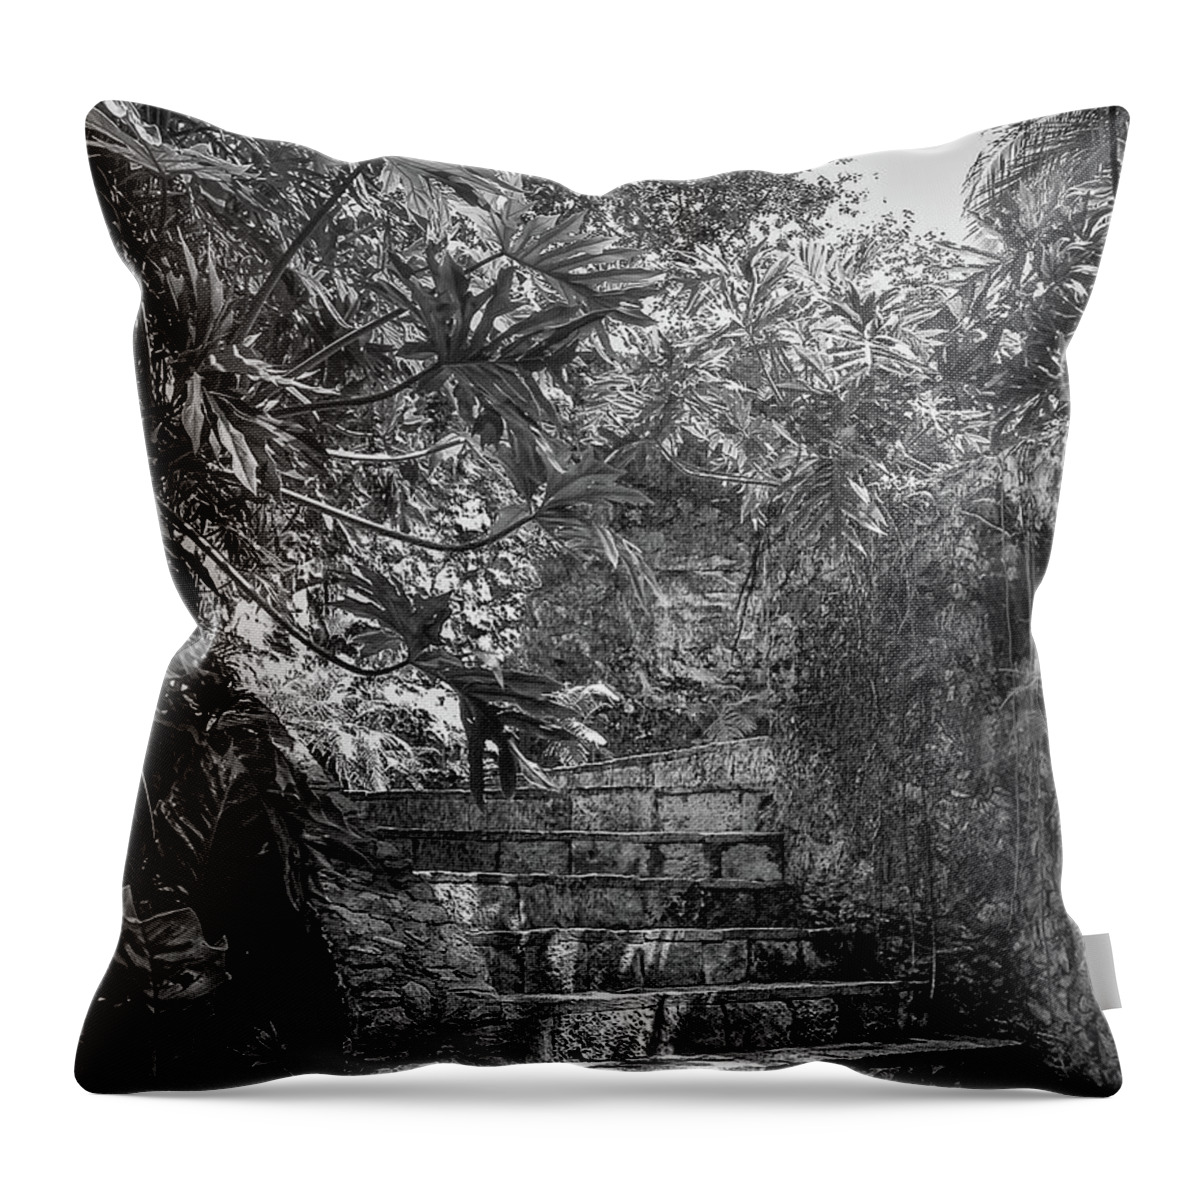 Chichen Itza Throw Pillow featuring the photograph Steps Near Cenote Chichen Itza by Frank Mari